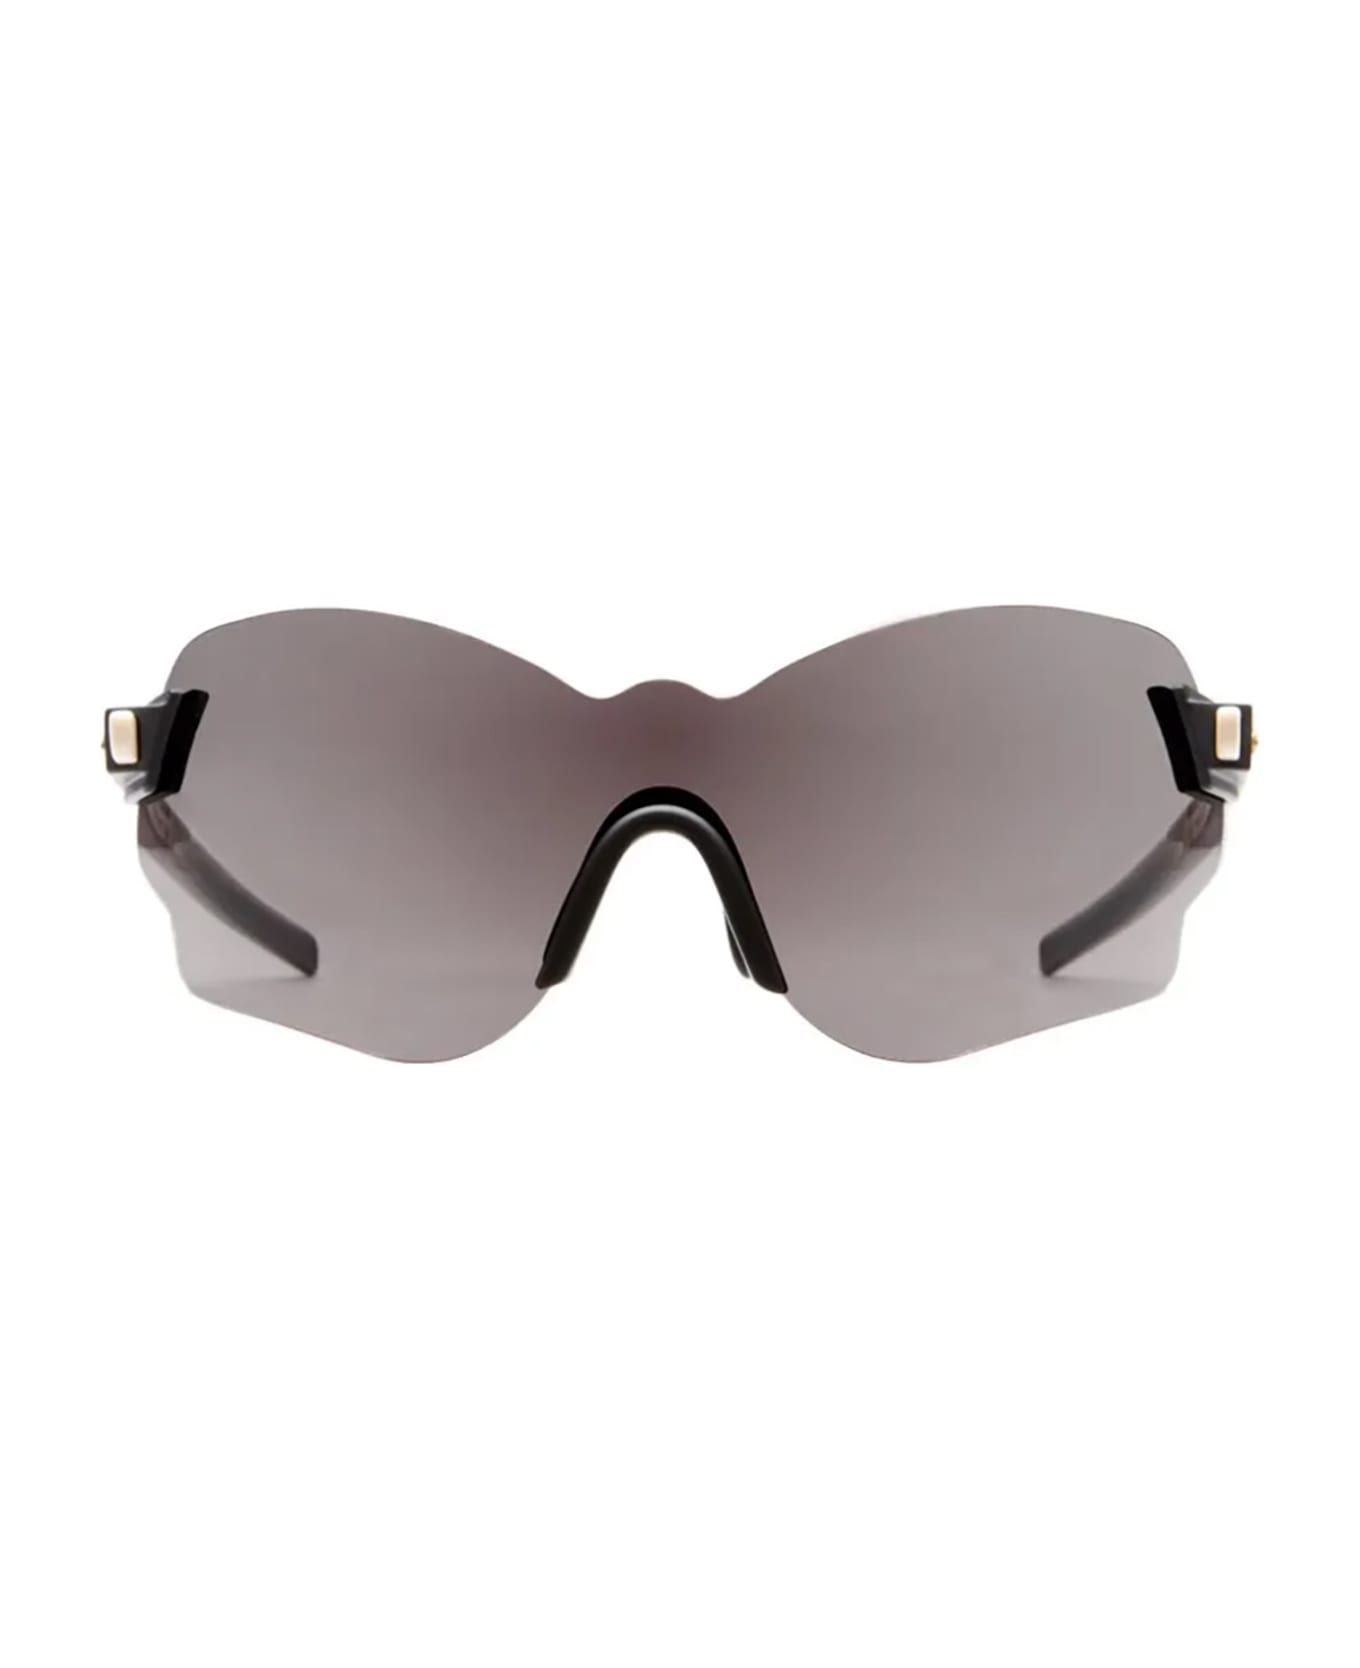 Kuboraum E51 Sunglasses - Brh Darkg